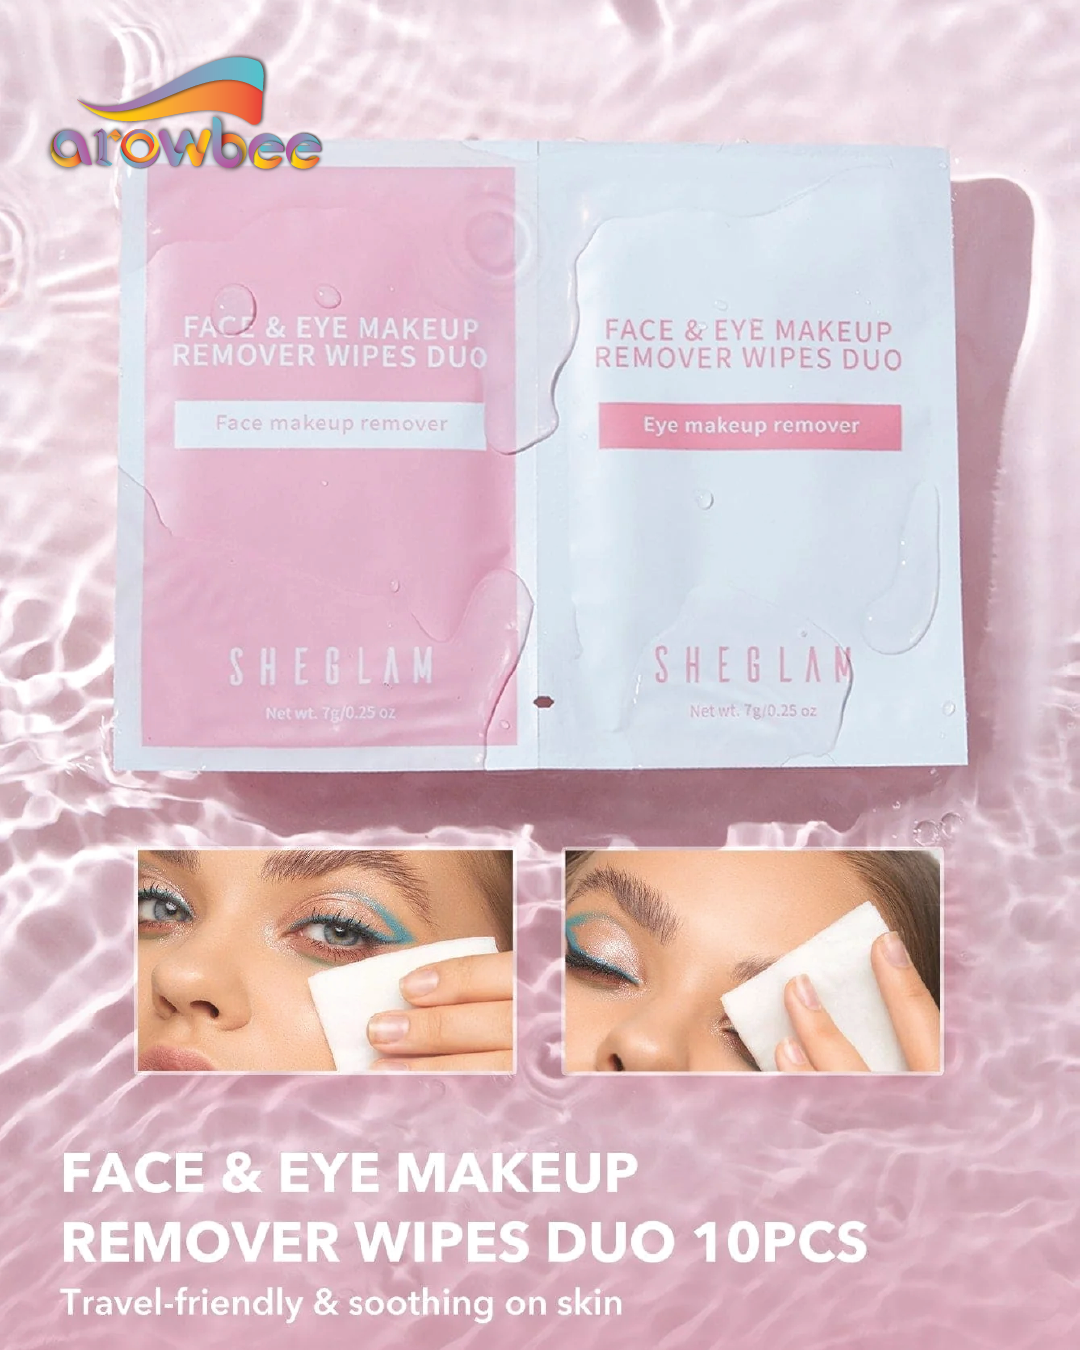 SHEGLAM Face & Eye Makeup Remover Wipes Duo10pcs